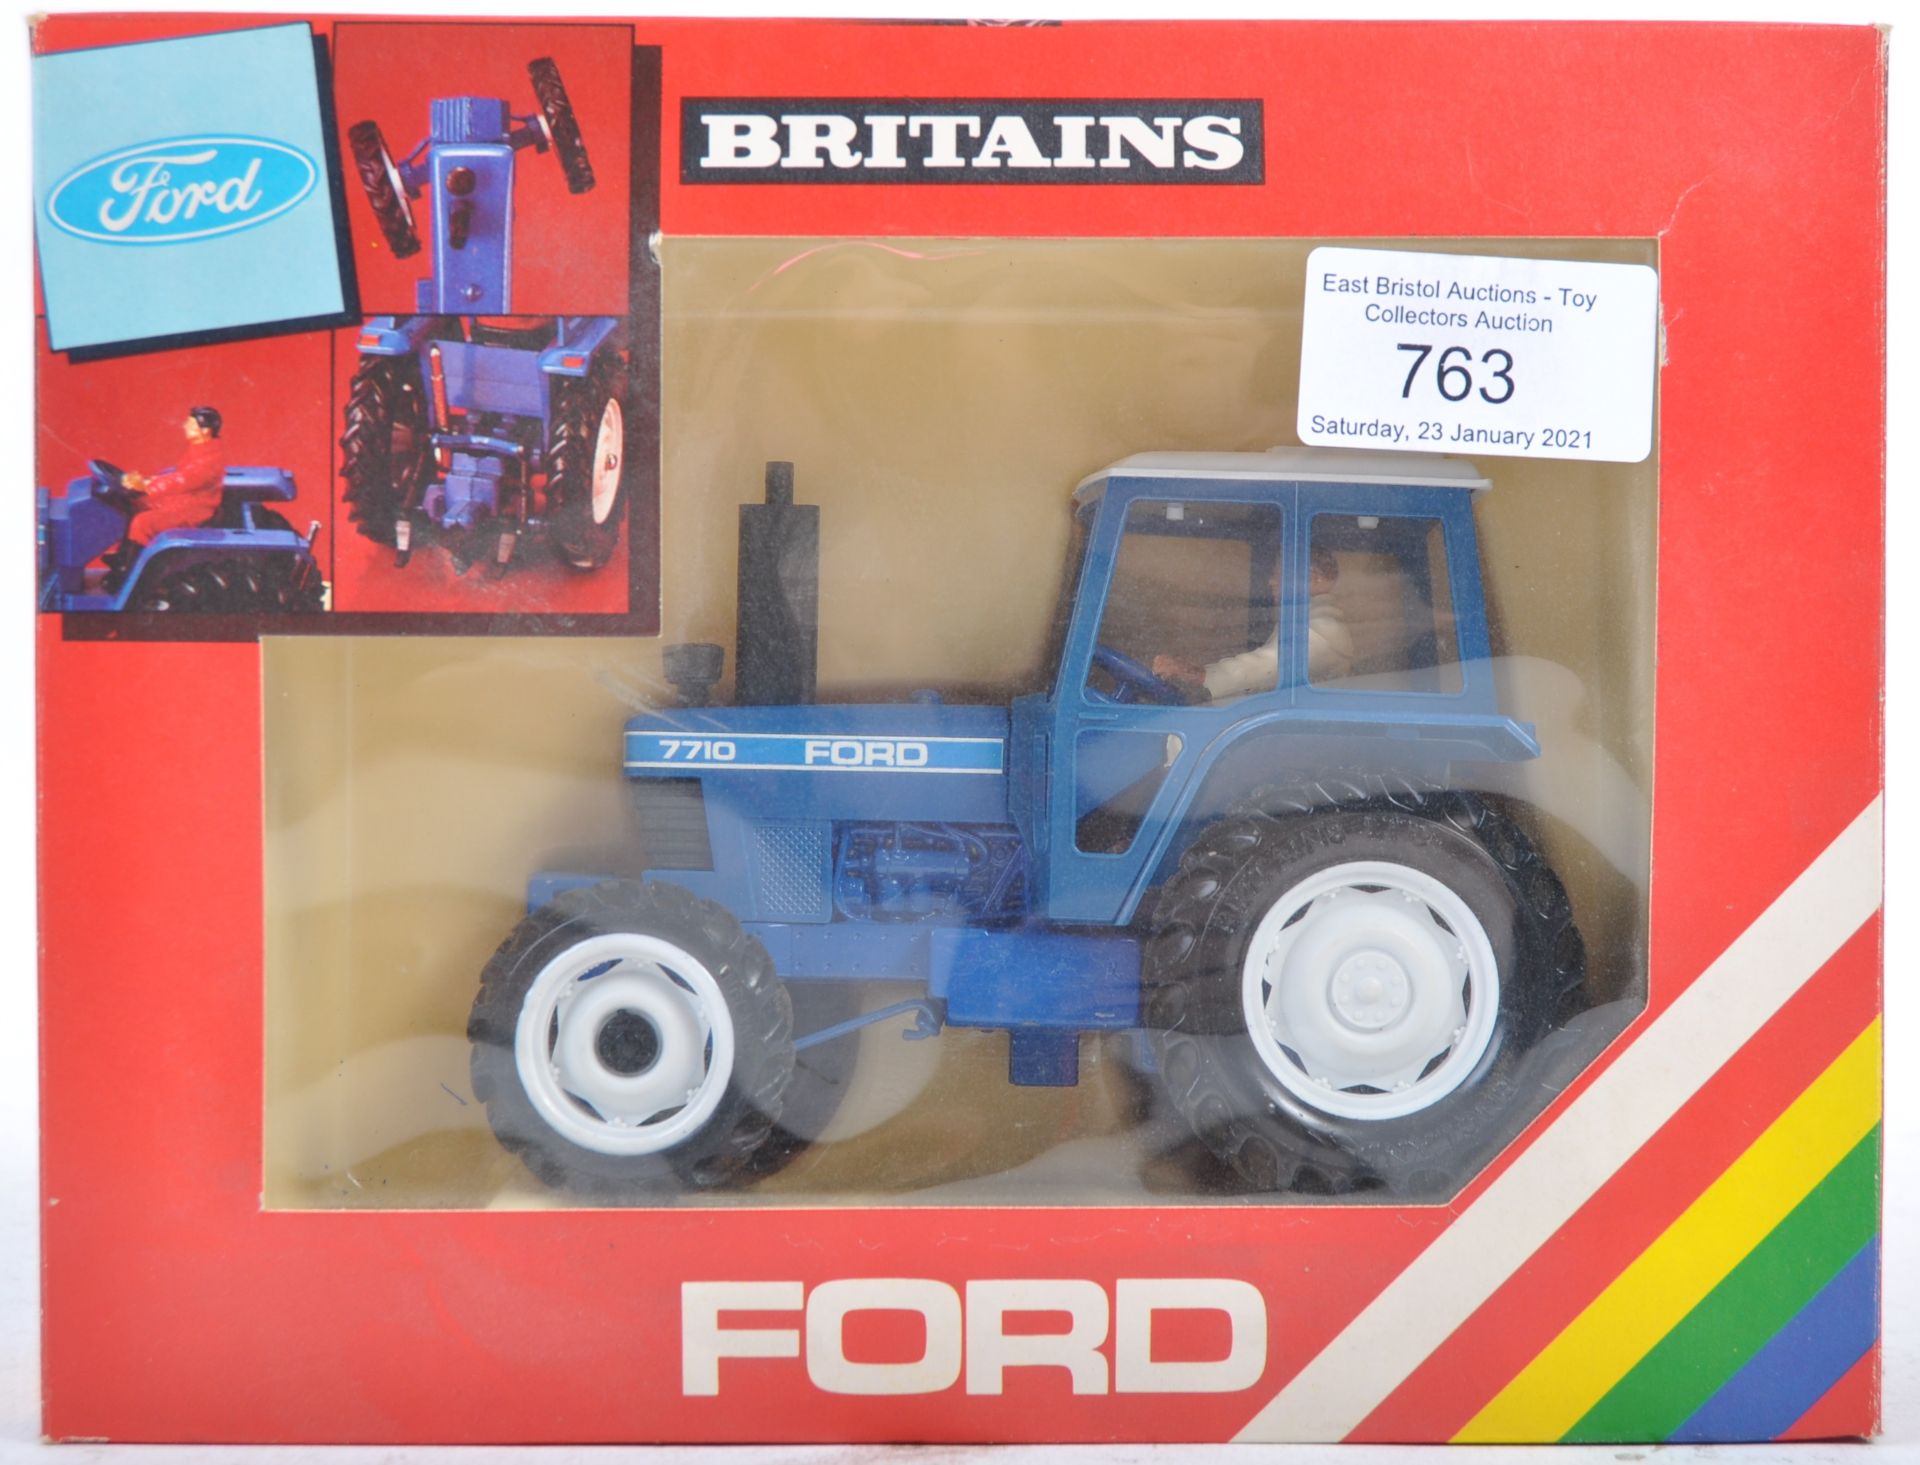 BRITAINS FARM SERIES 9523 FORD TRACTOR 7710